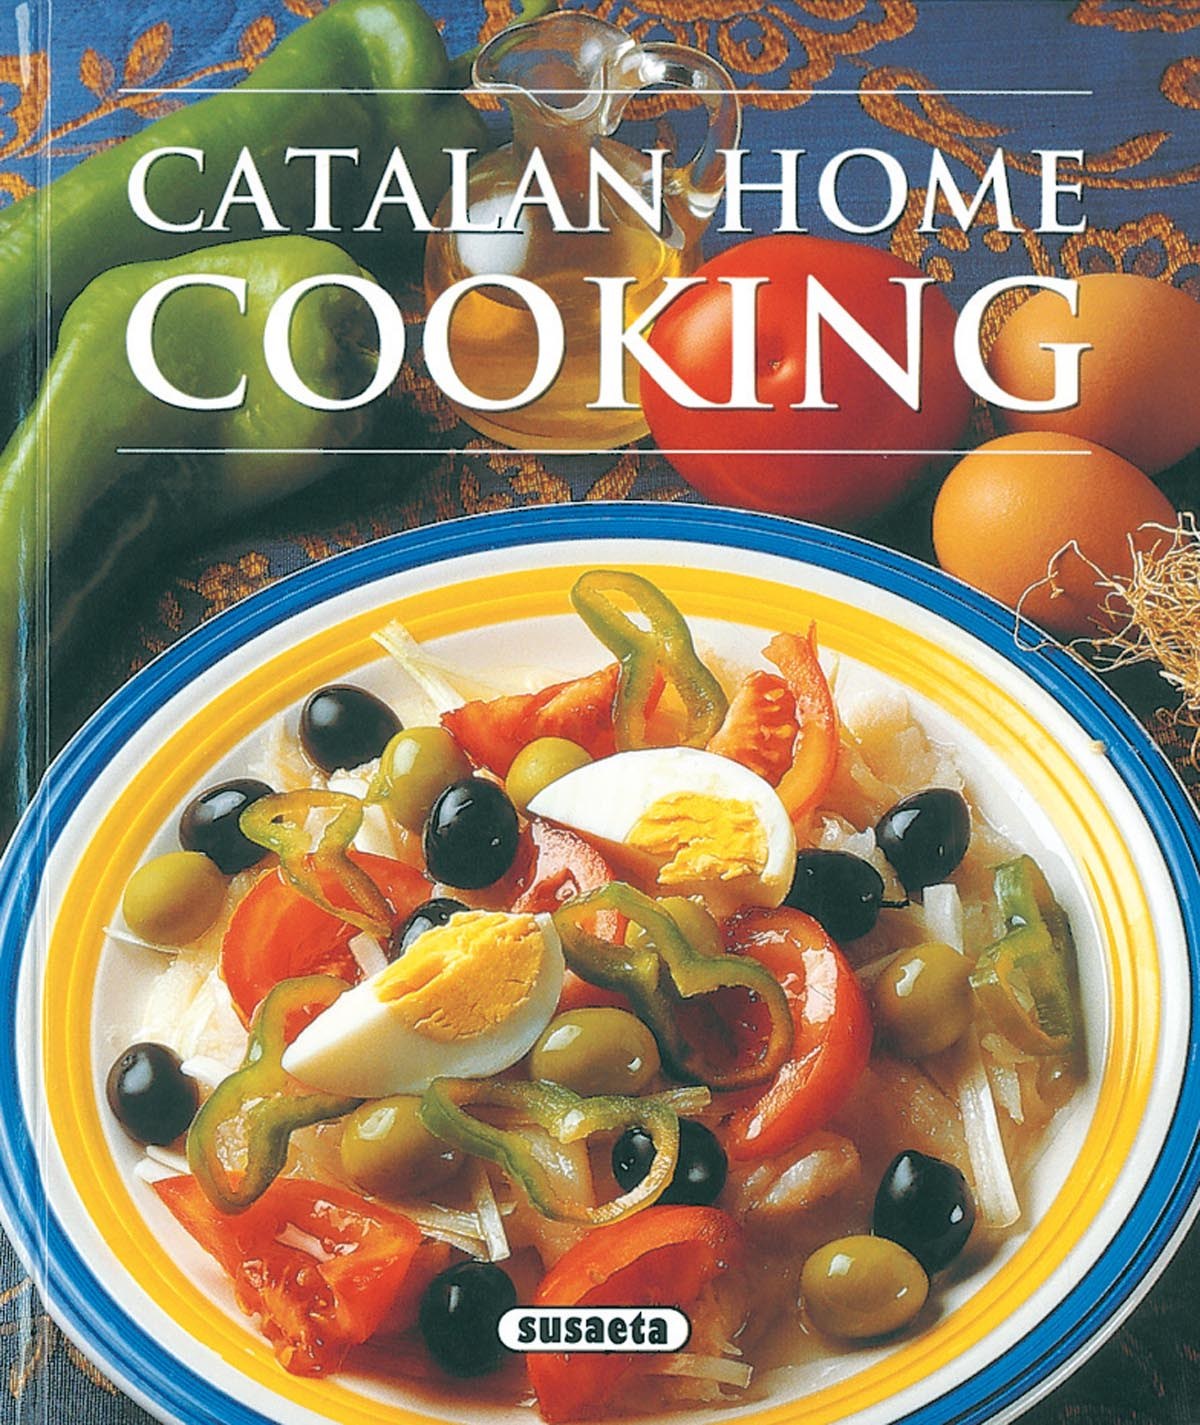 Catalan home cooking - Susaeta, Equipo